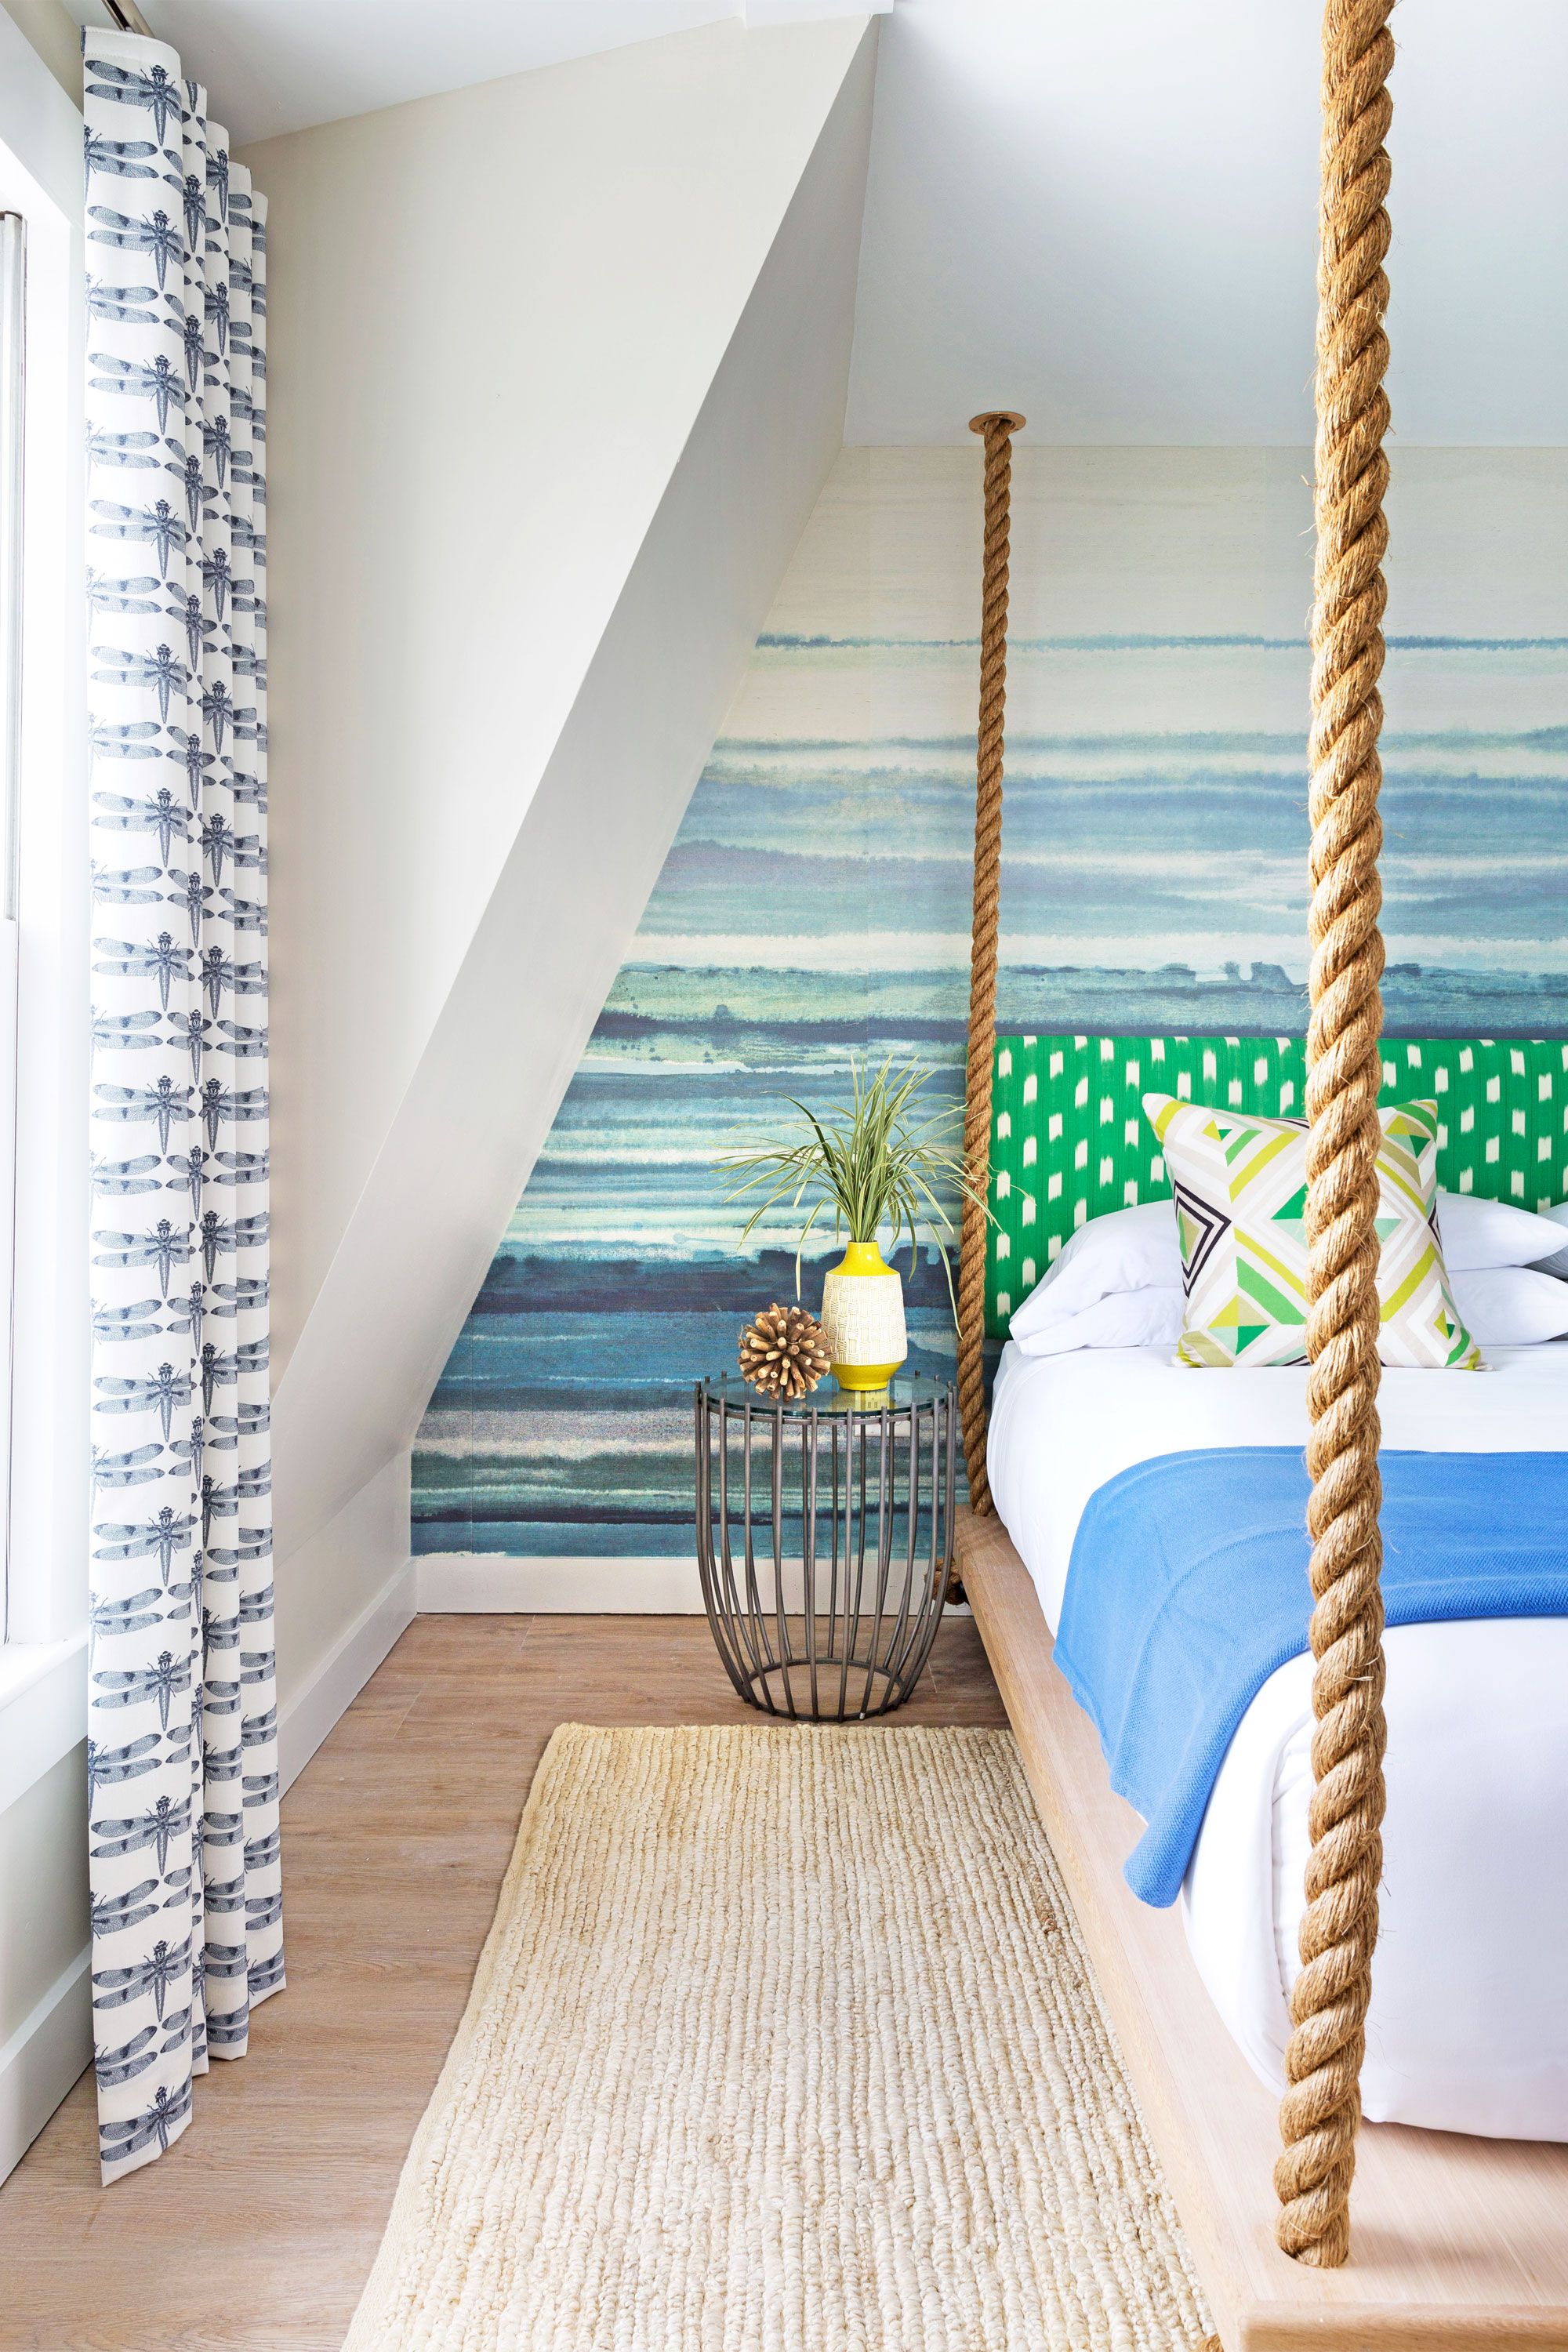 48 Beach House Decorating Ideas - Beach House Style For Your Home